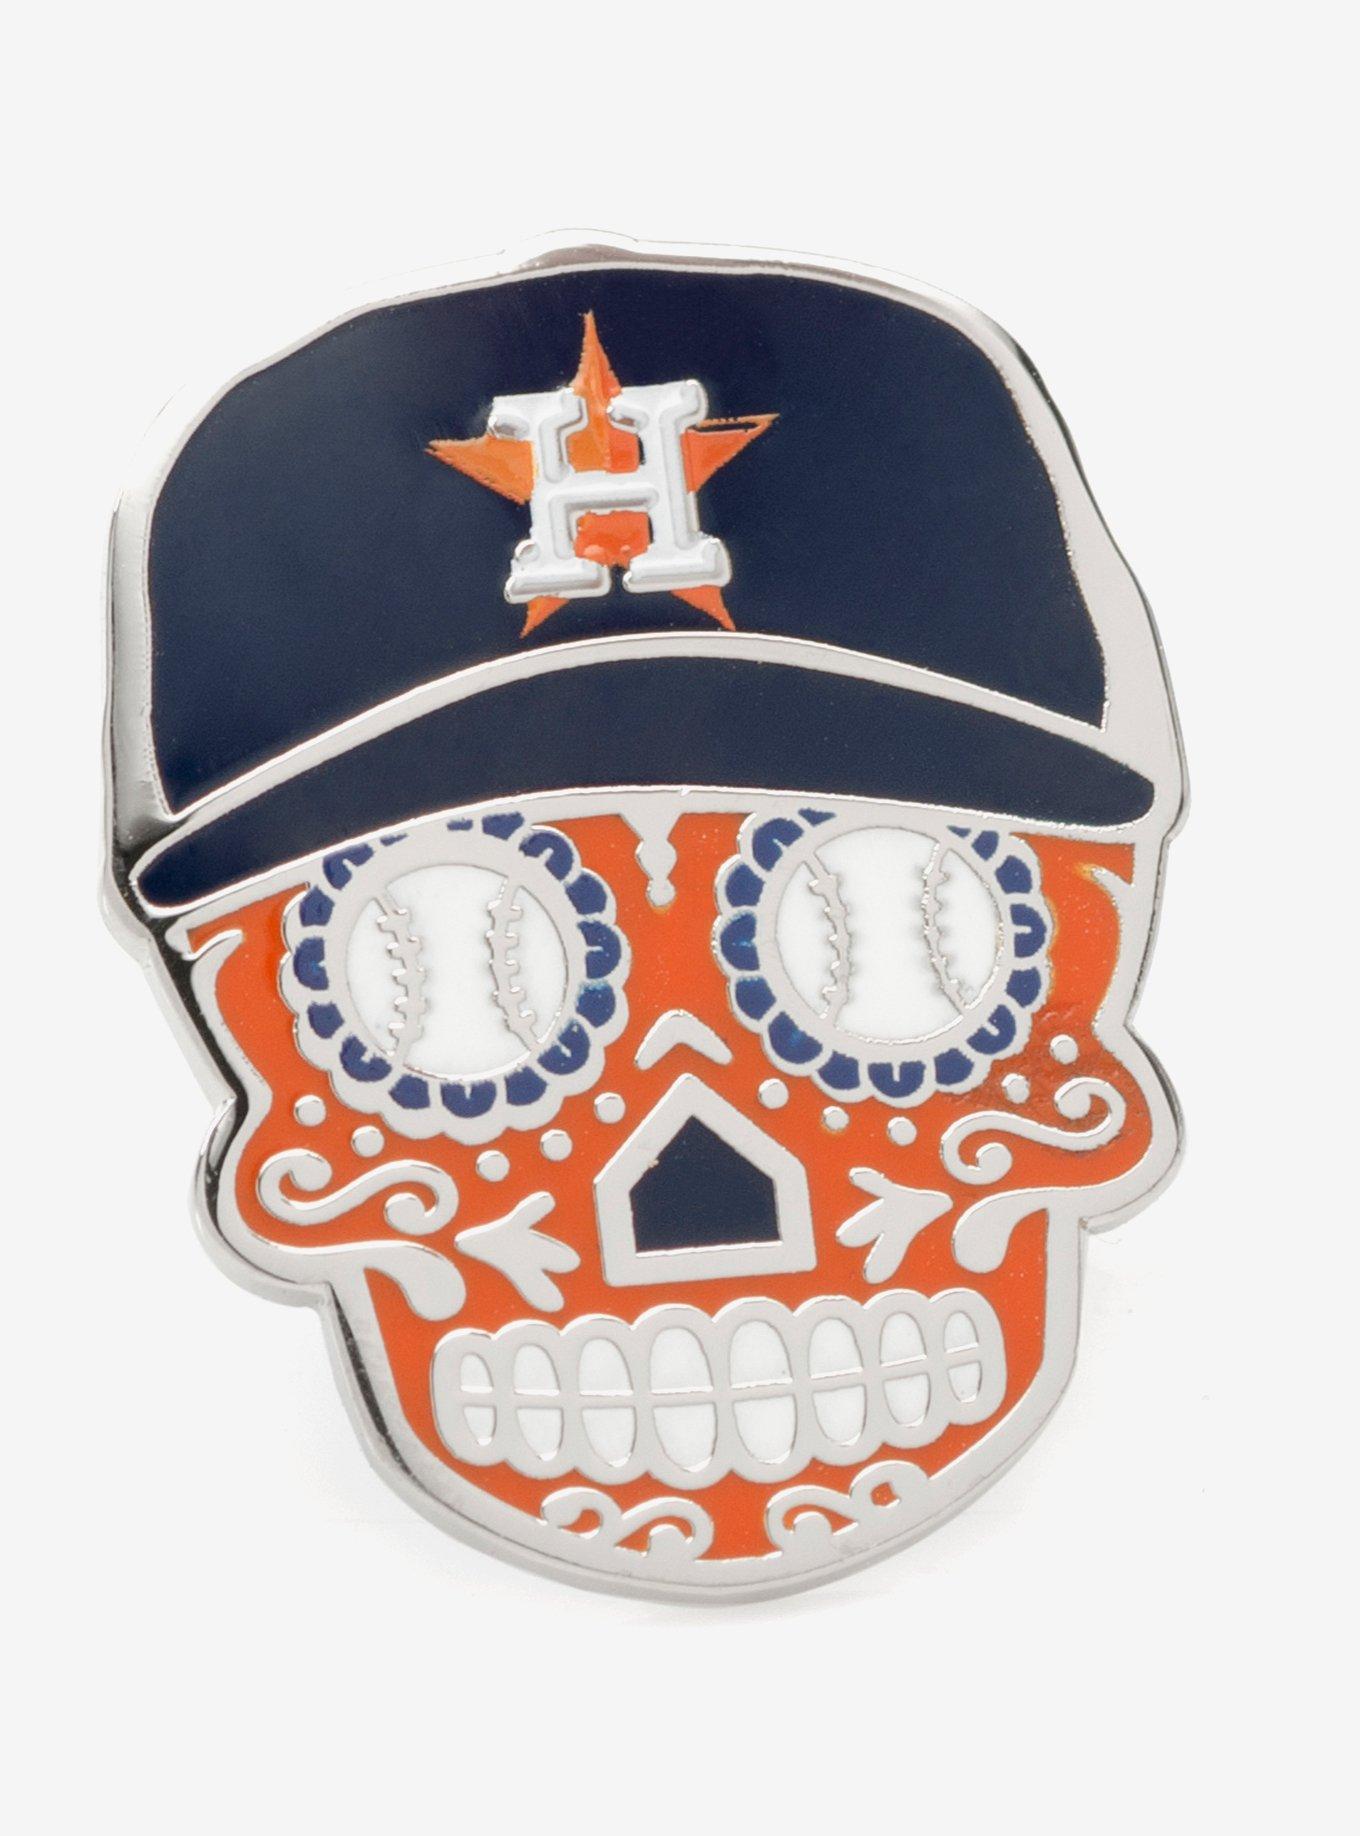 Houston Astros Skull SVG, Day Of The Dead Houston Astros Sugar